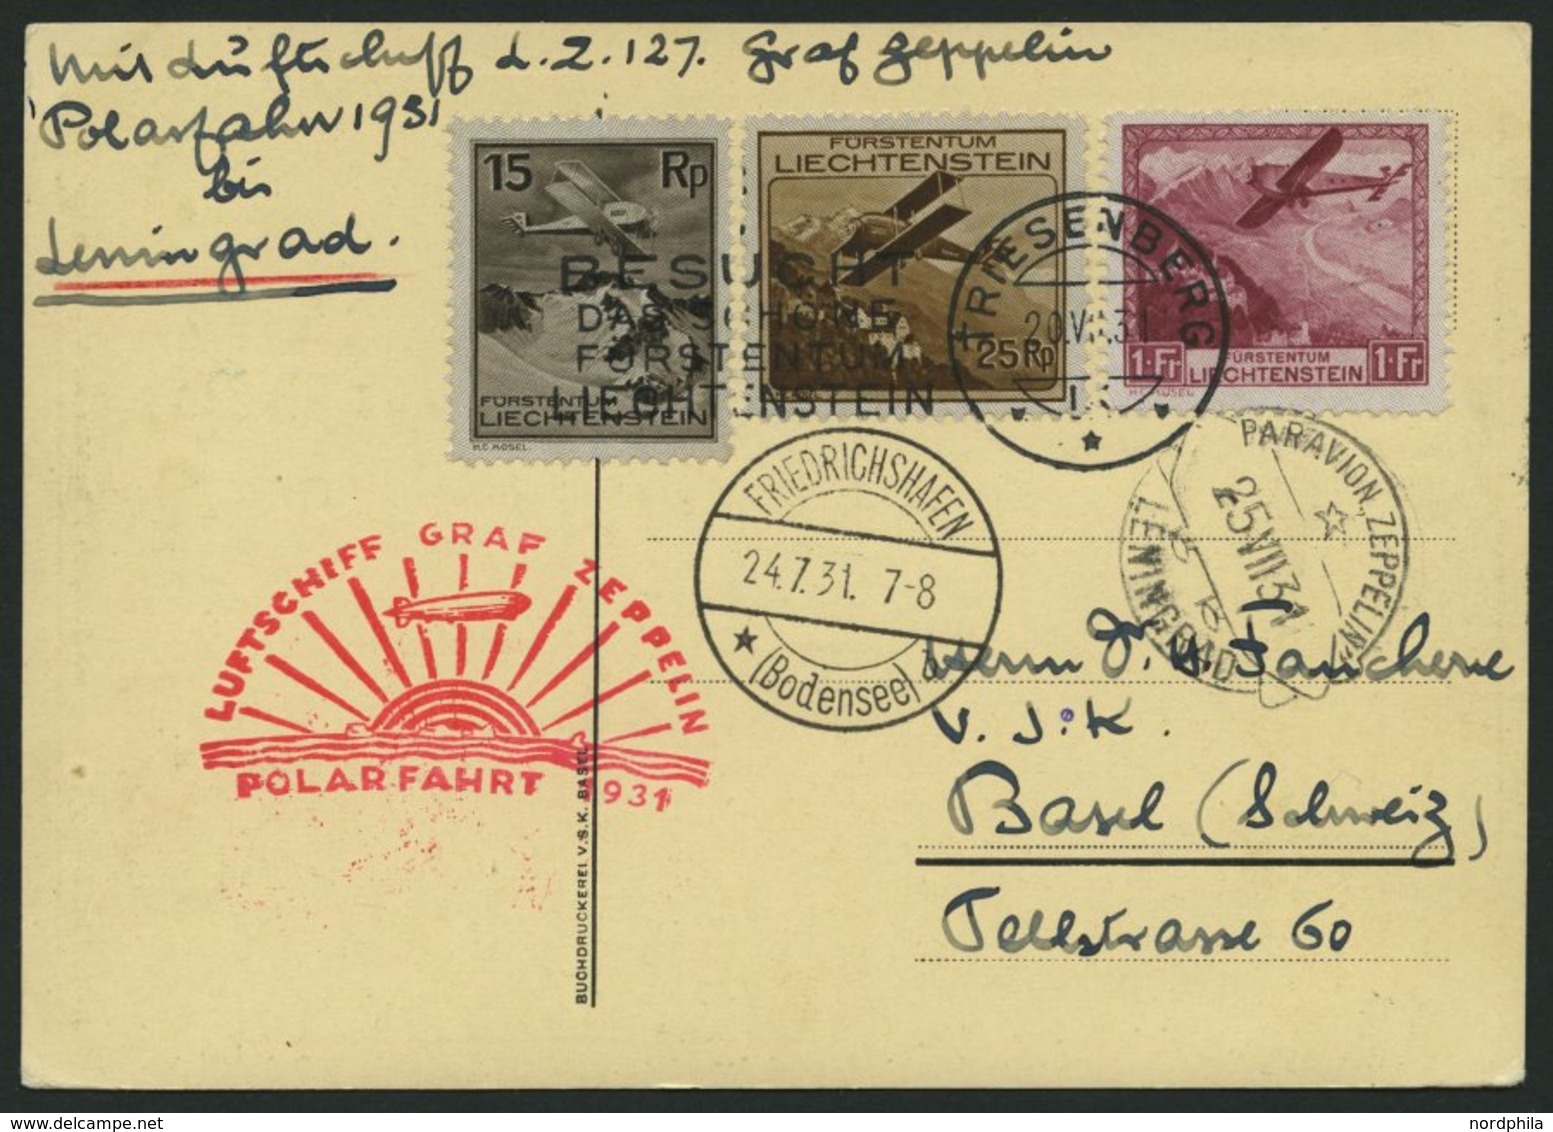 ZULEITUNGSPOST 119E BRIEF, Liechtenstein: 1931, Polarfahrt, Abgabe Leningrad, Prachtkarte - Zeppelins